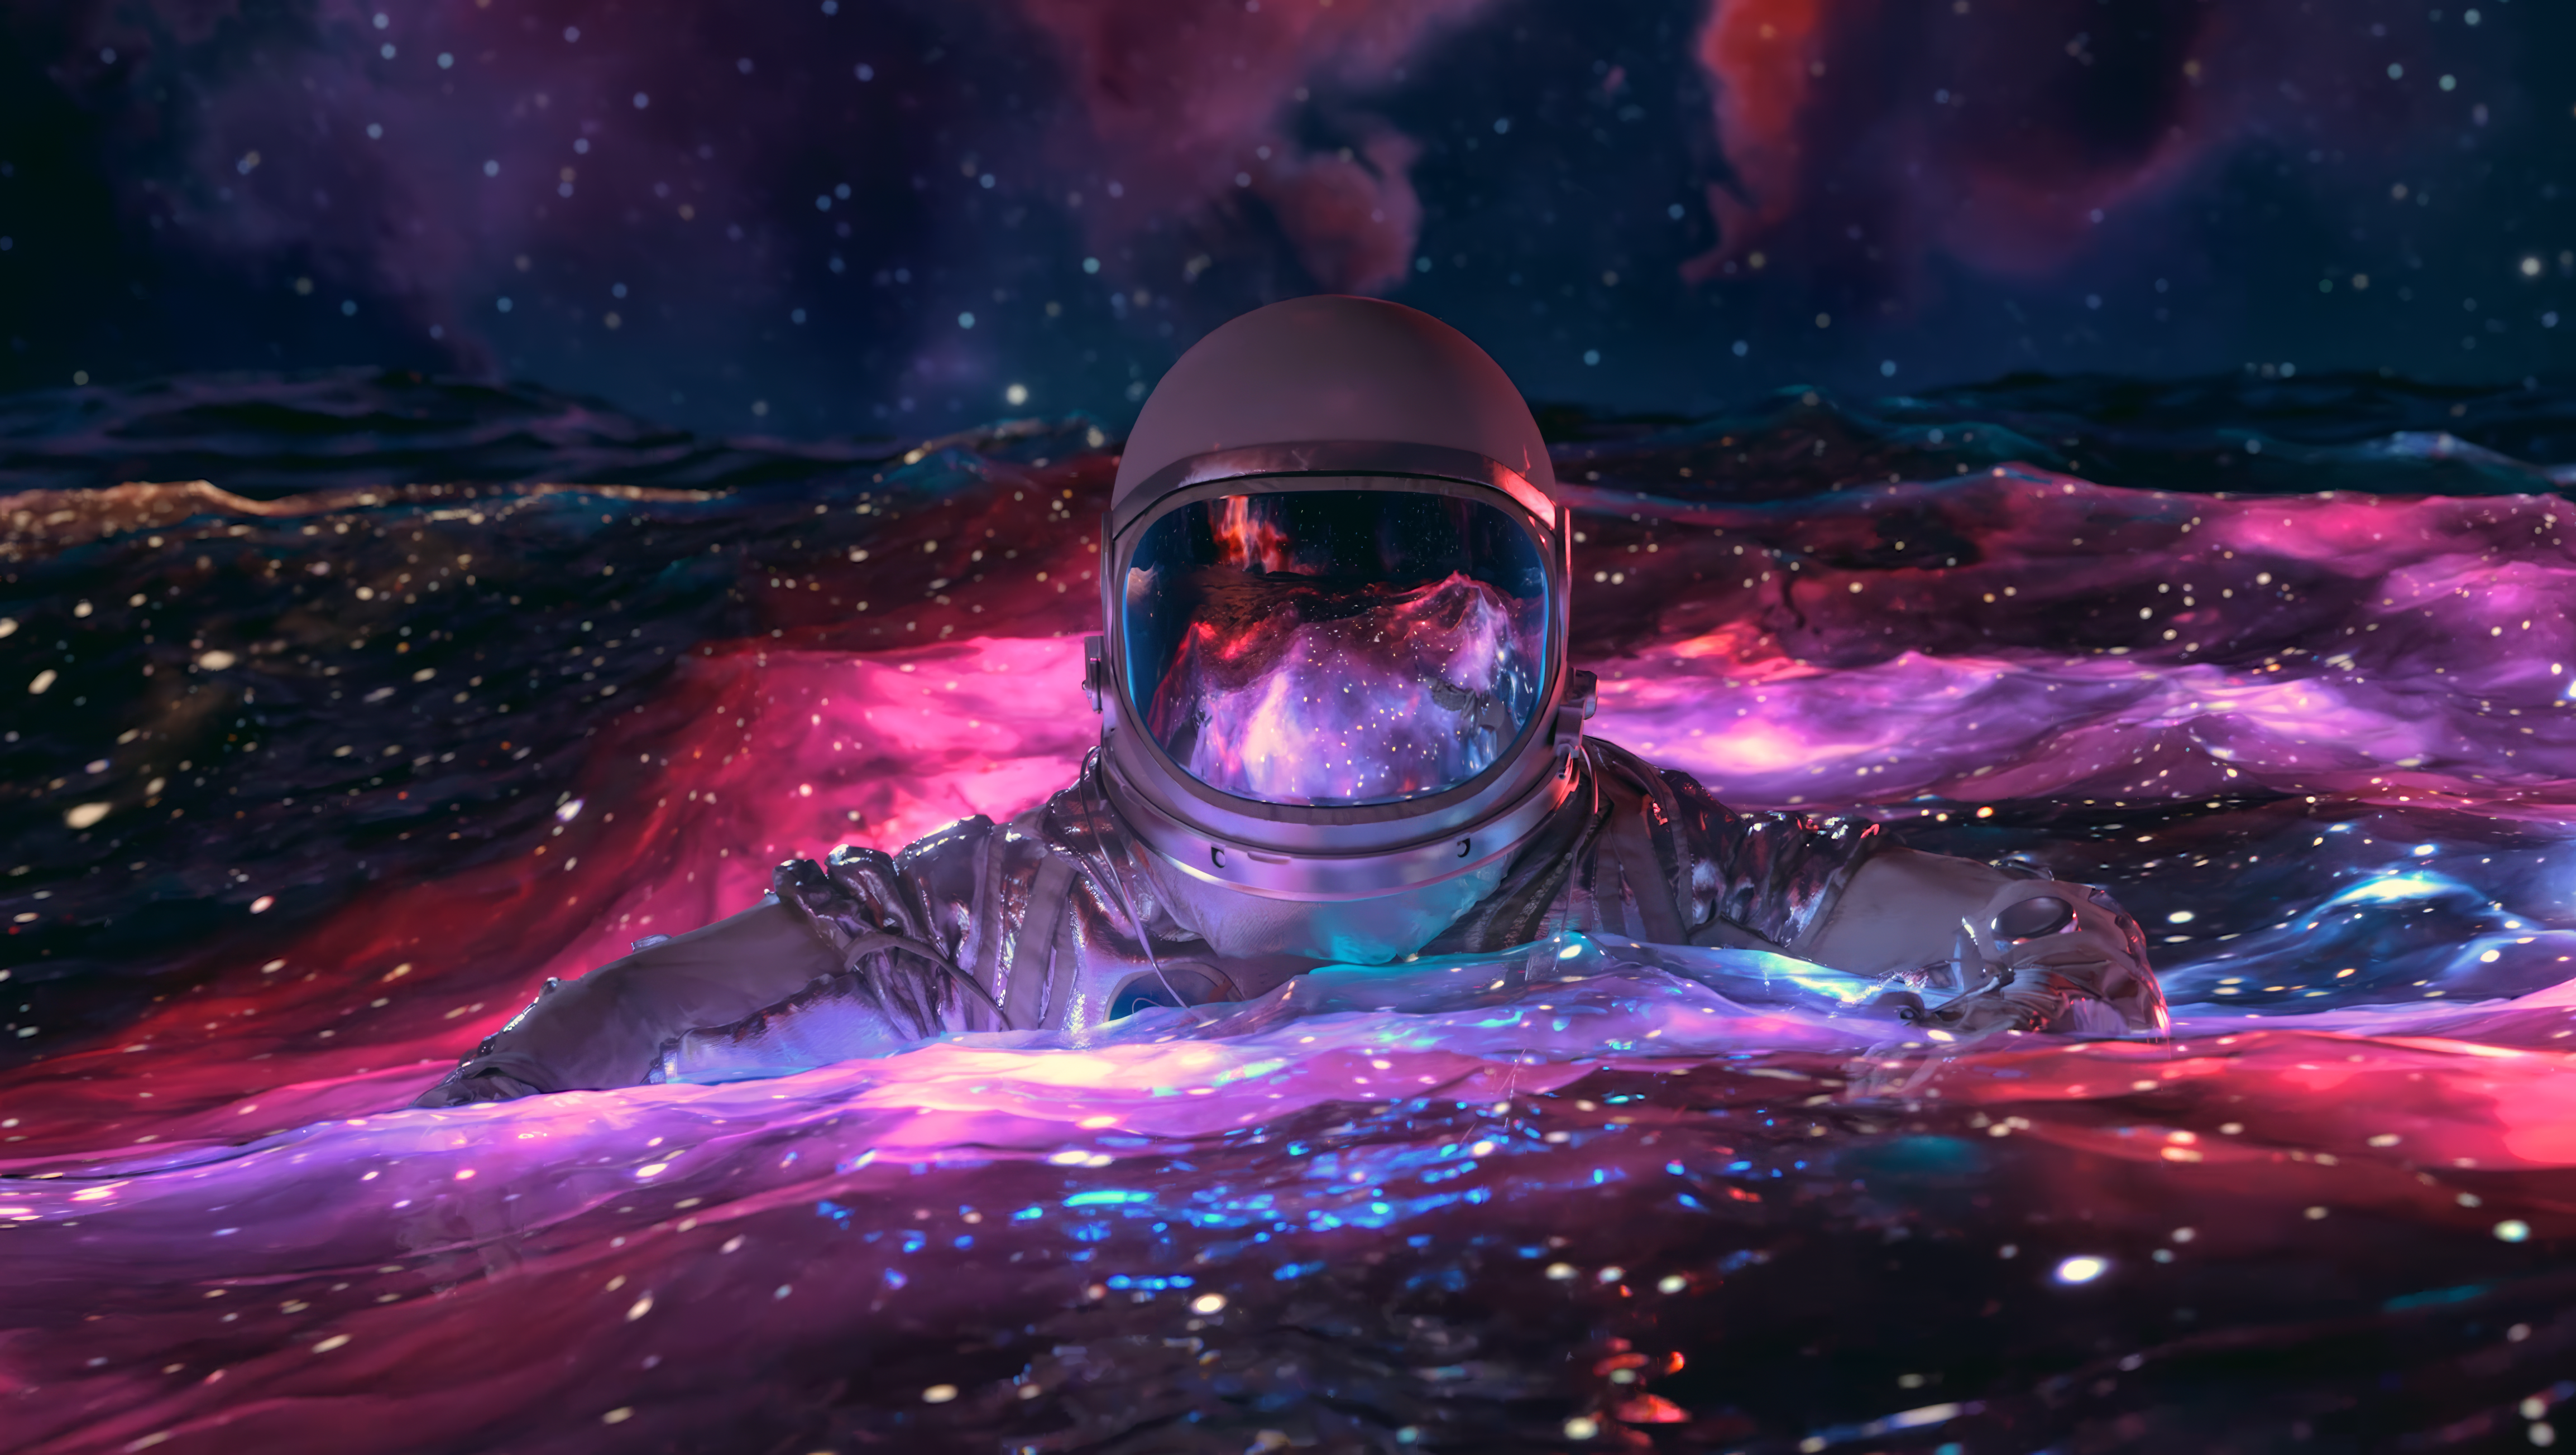 Colorful Space Reflection Visualdon Astronaut Nebula Water Digital Art 4614x2607